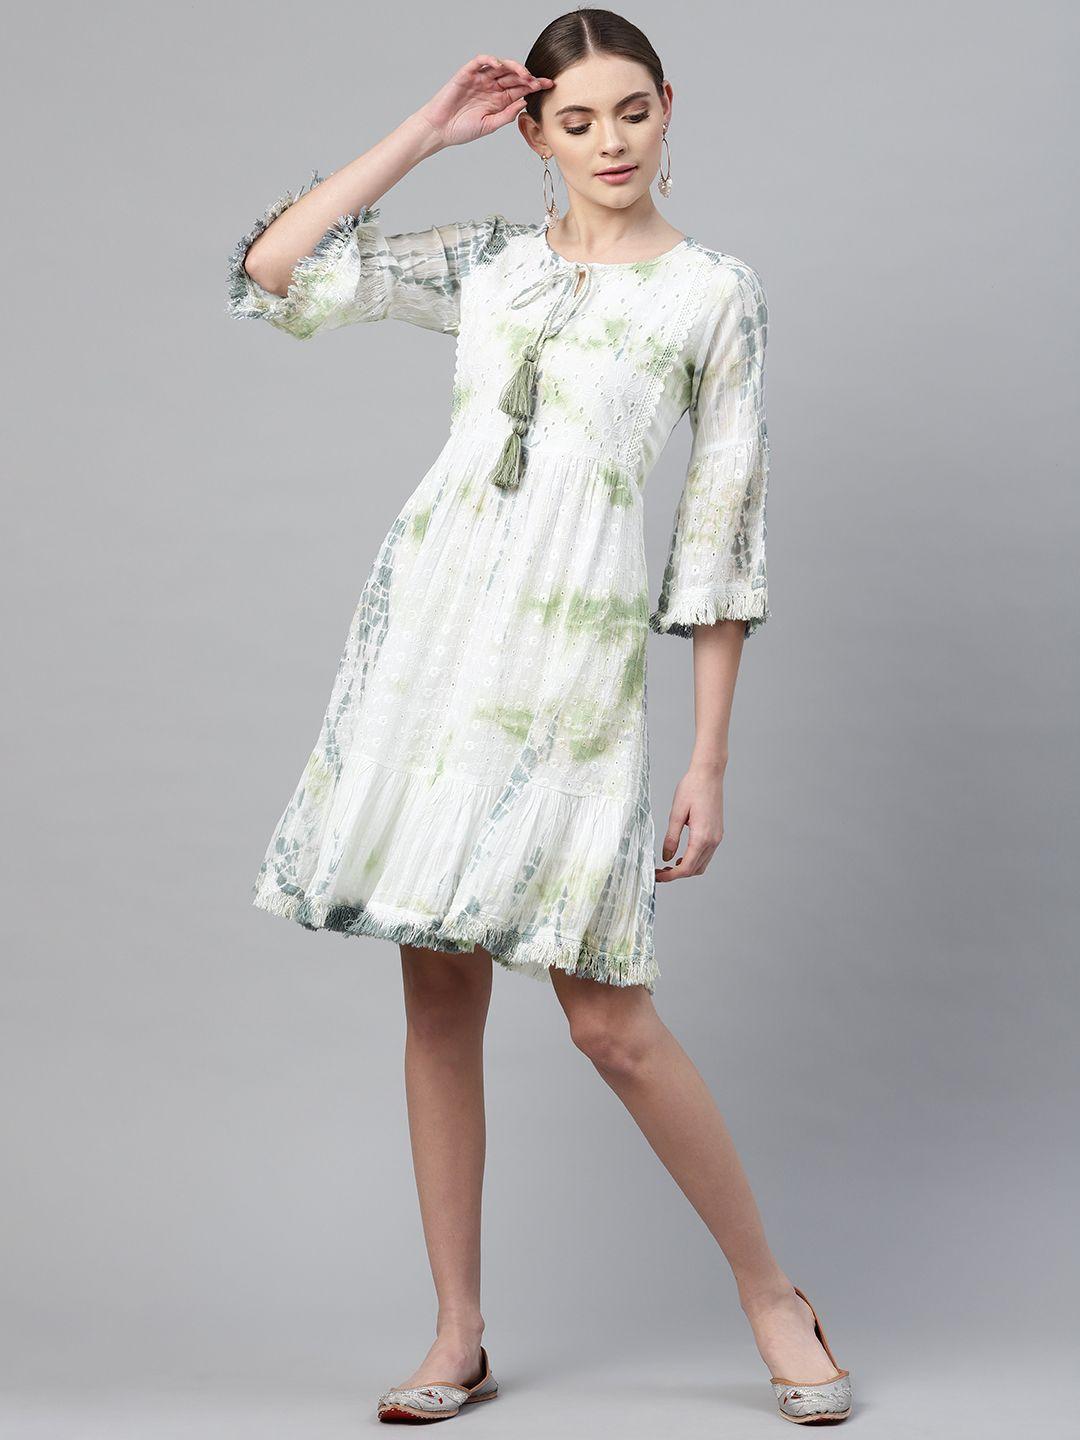 readiprint-fashions-white-&-olive-green-tie-and-dye-schiffli-a-line-dress